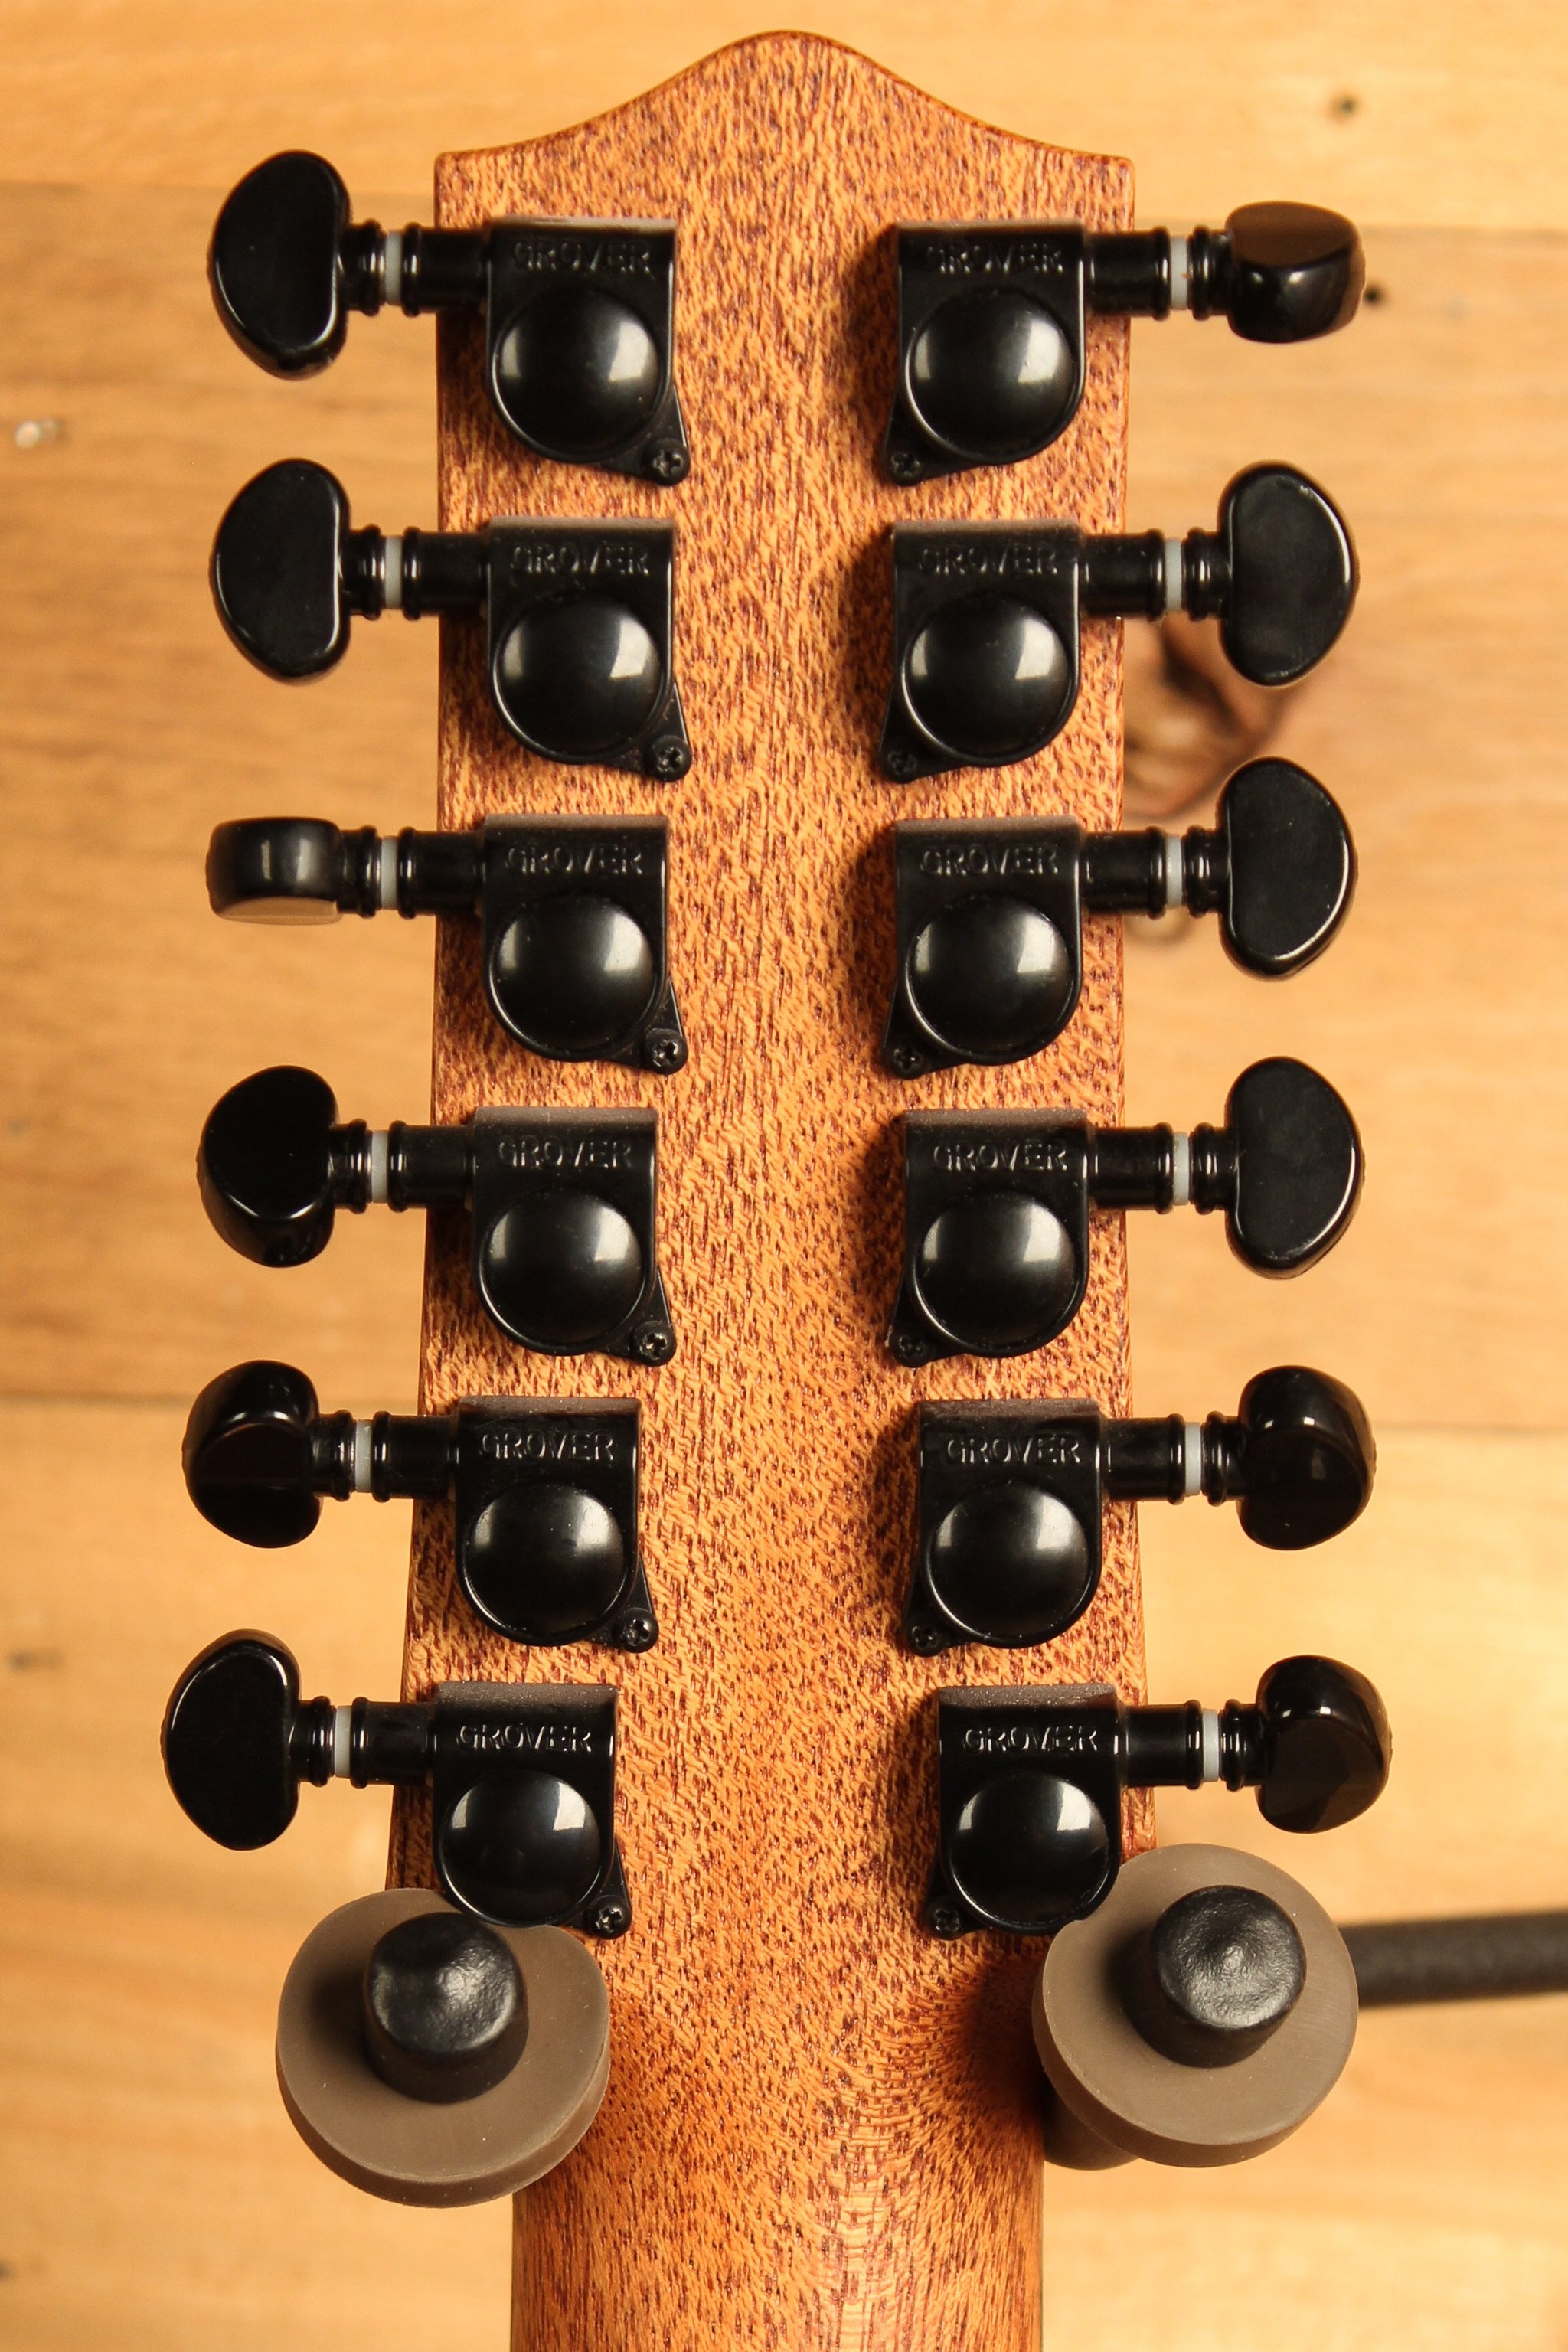 Maton EMM-12 String Mini Maton All Mahogany with AP5 Pro Pre-Owned 2019 ID-13256 - Artisan Guitars